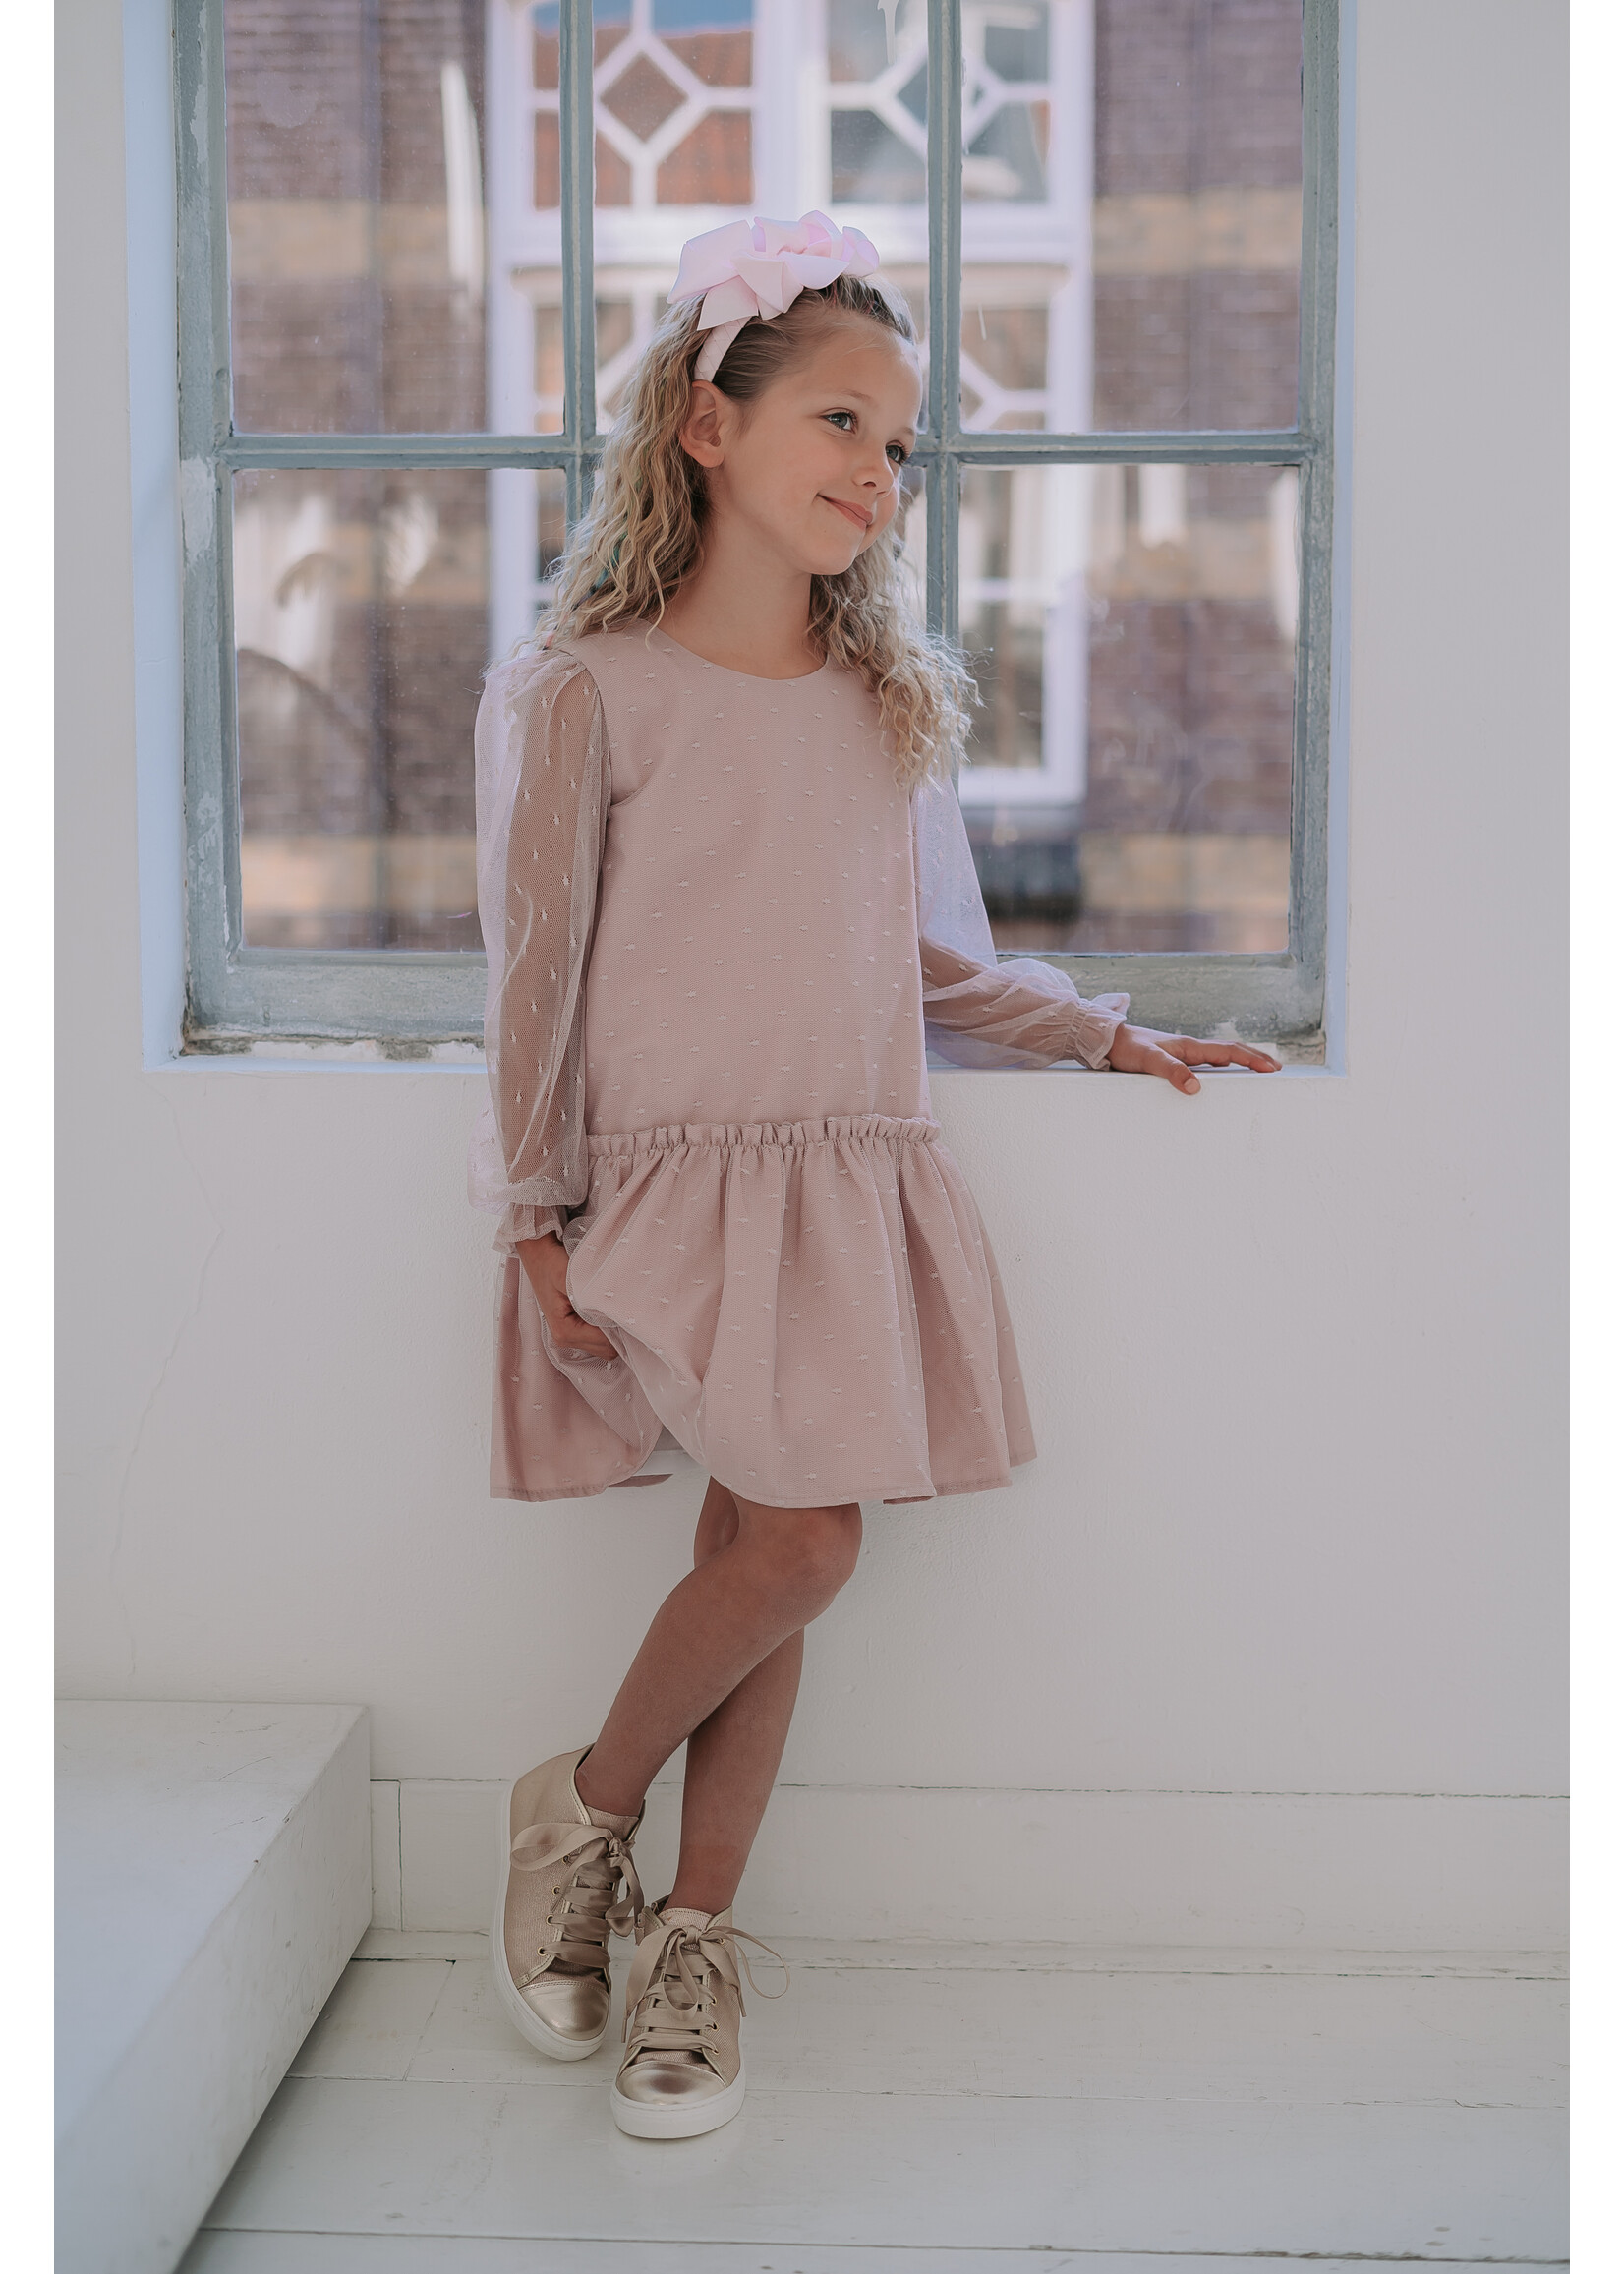 Petite Zara Dress Avalon - Petite Zara